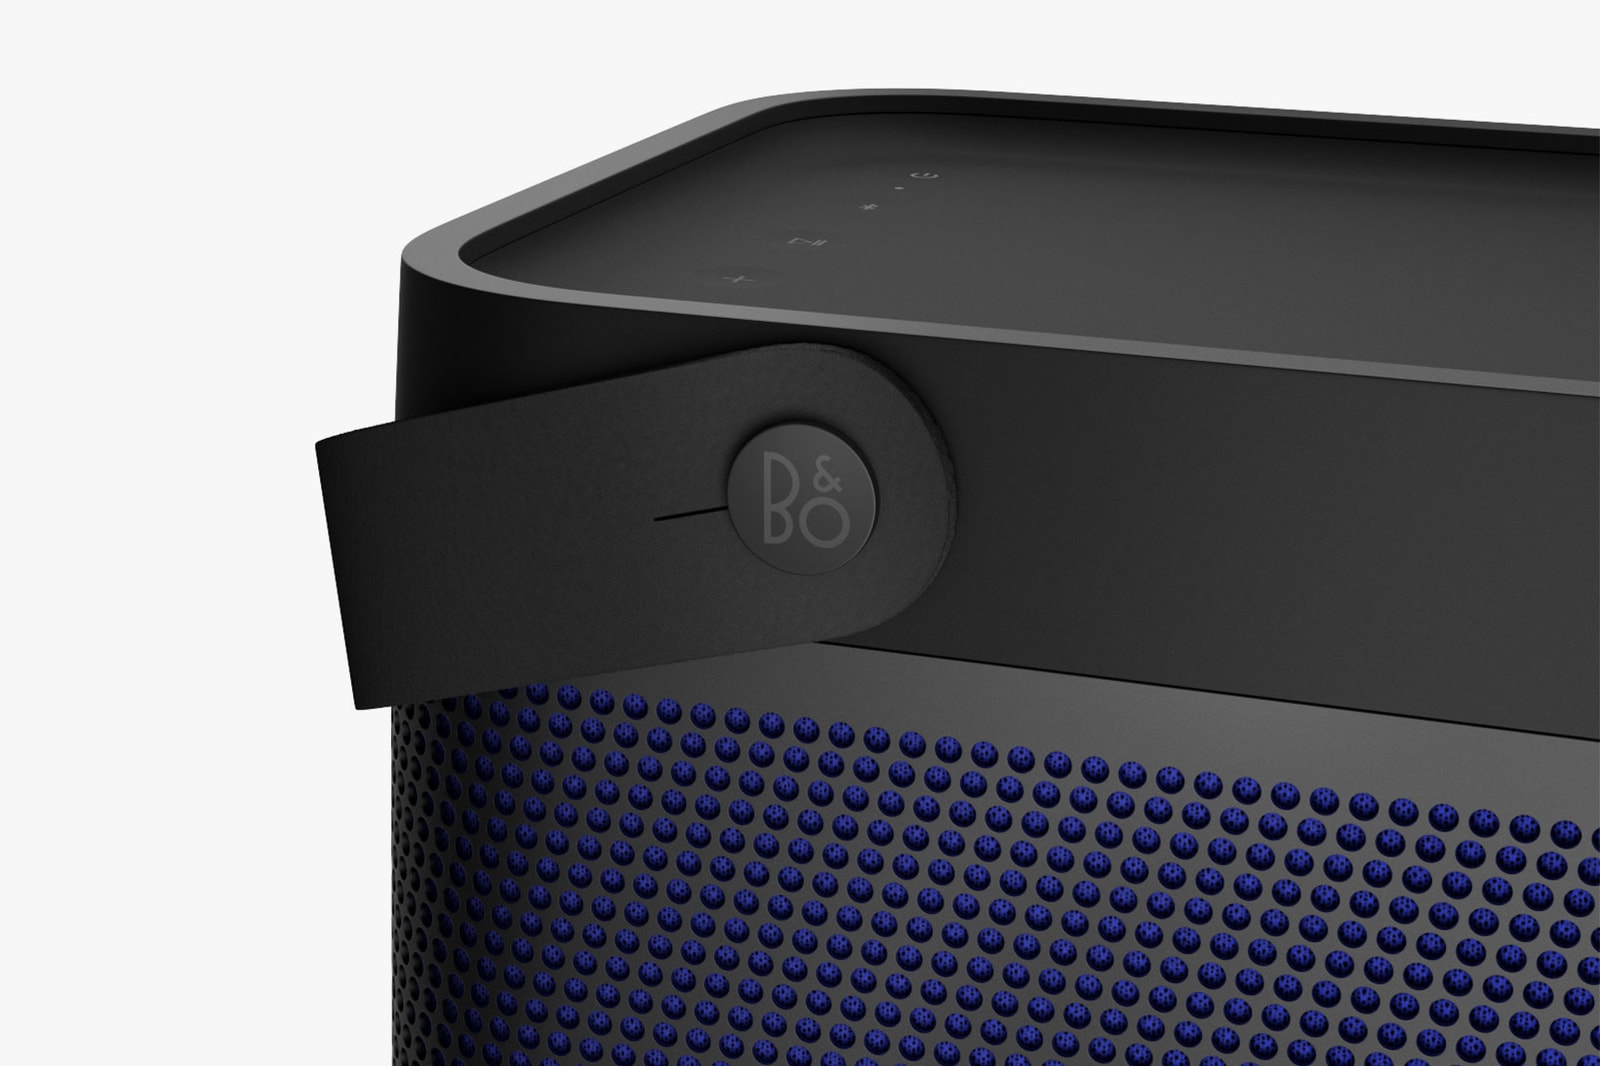 bang and olufsen beolit20 bluetooth speaker portable beige blue black anthracite grey mist price release